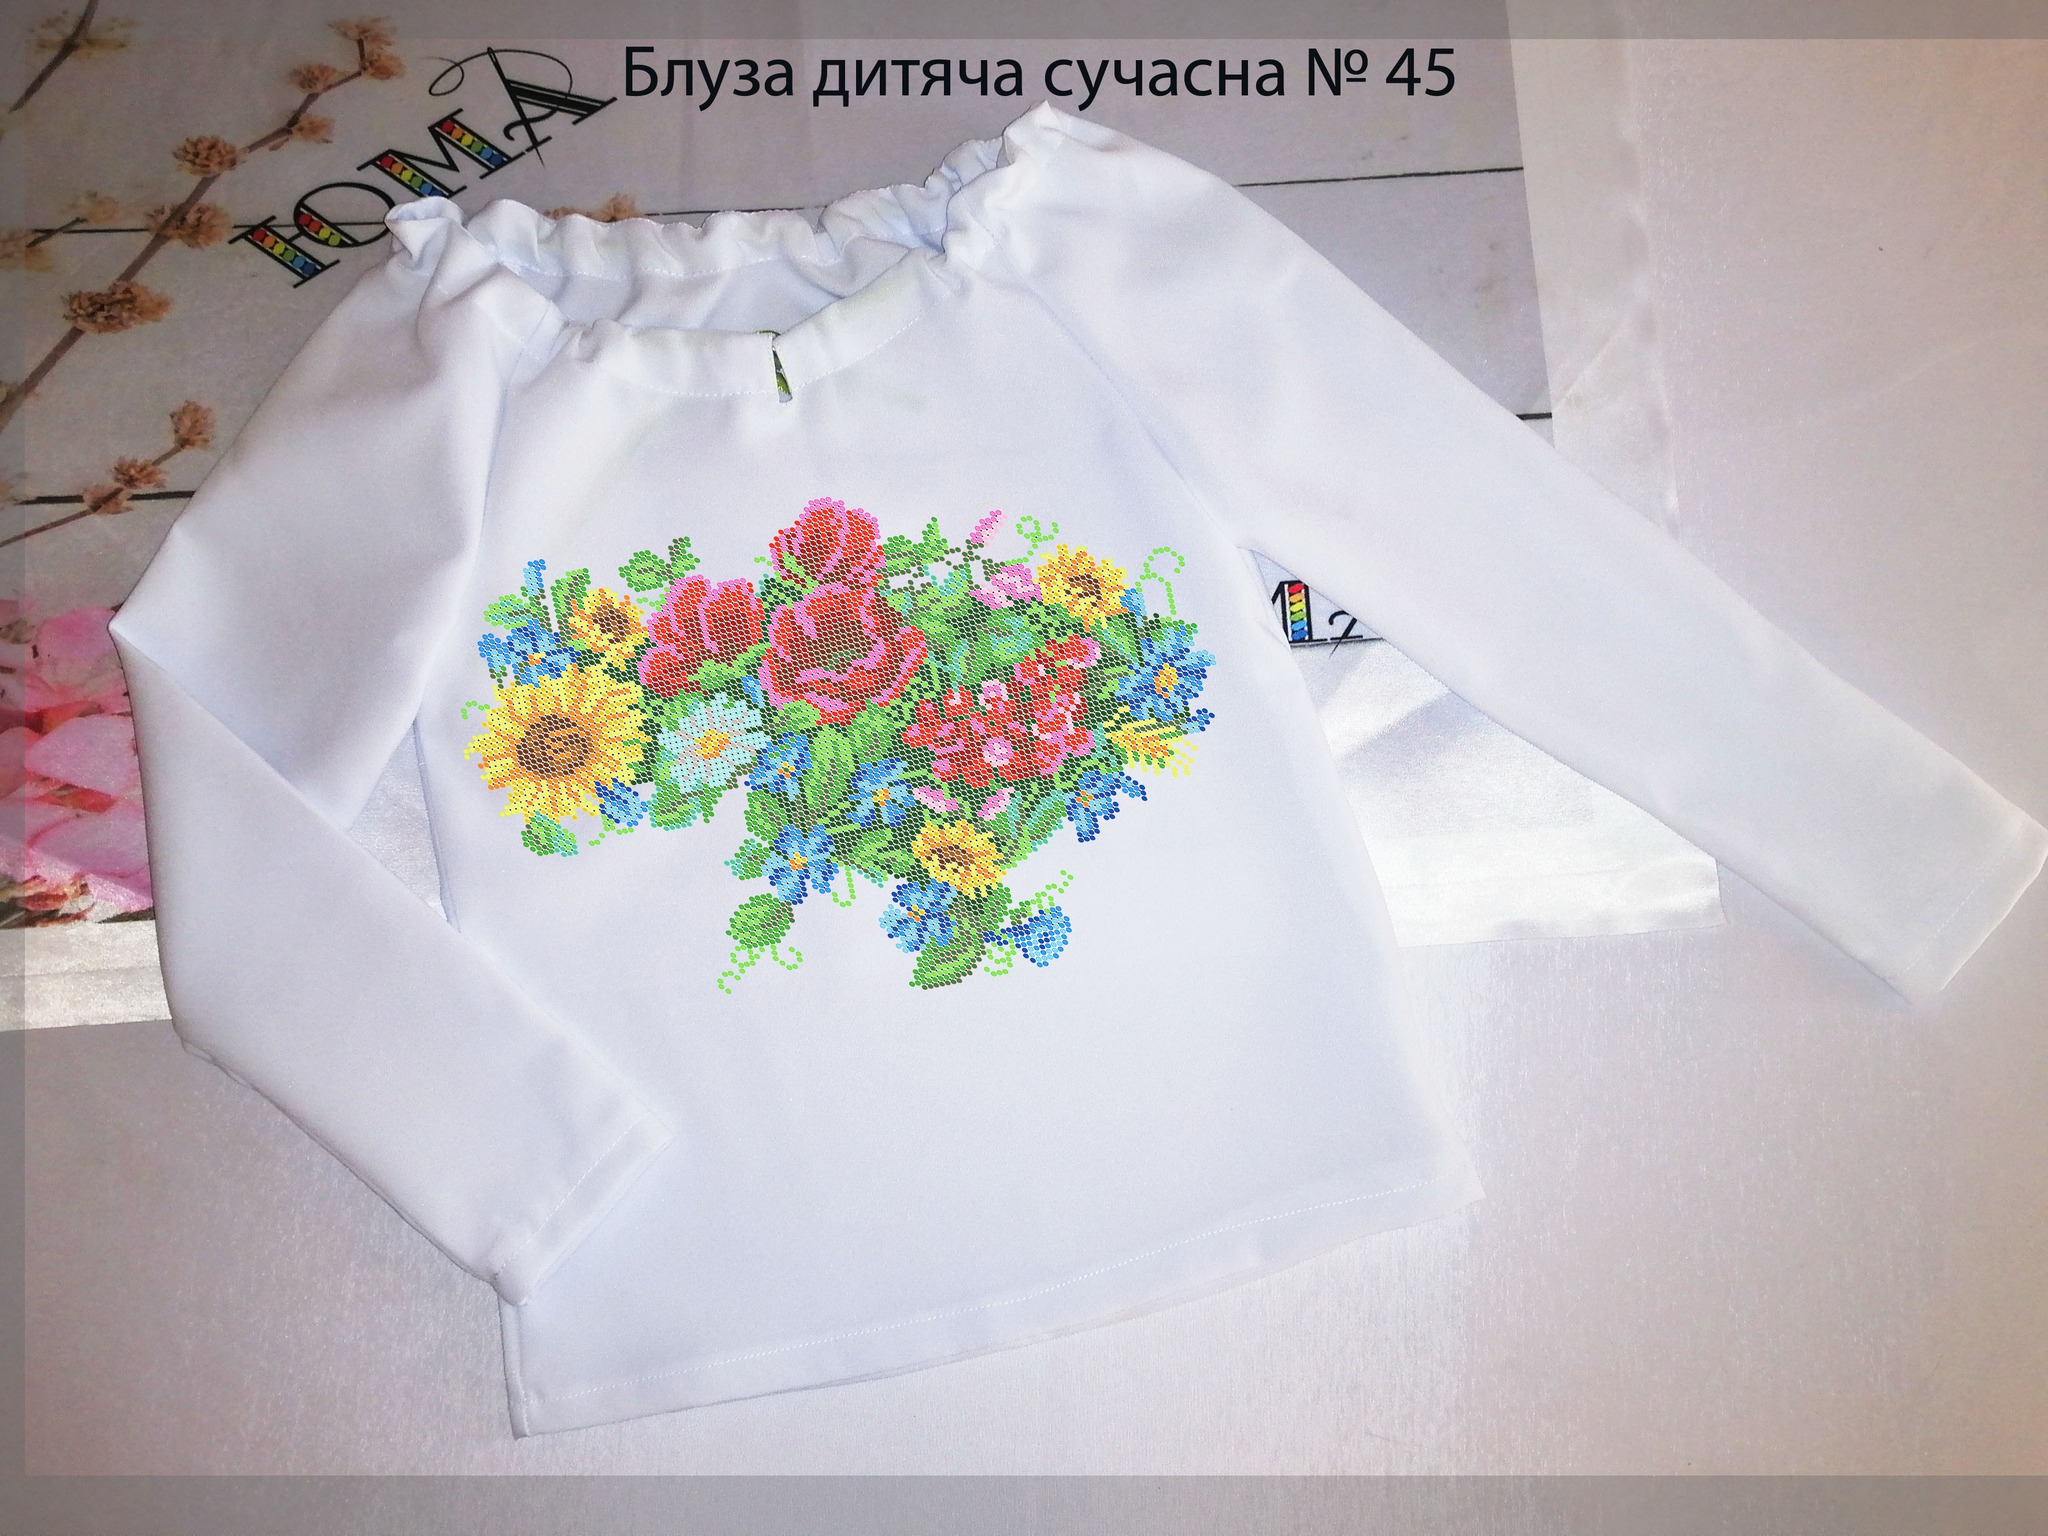 Пошита дитяча блузка для вишивки Сучасна БДС-45